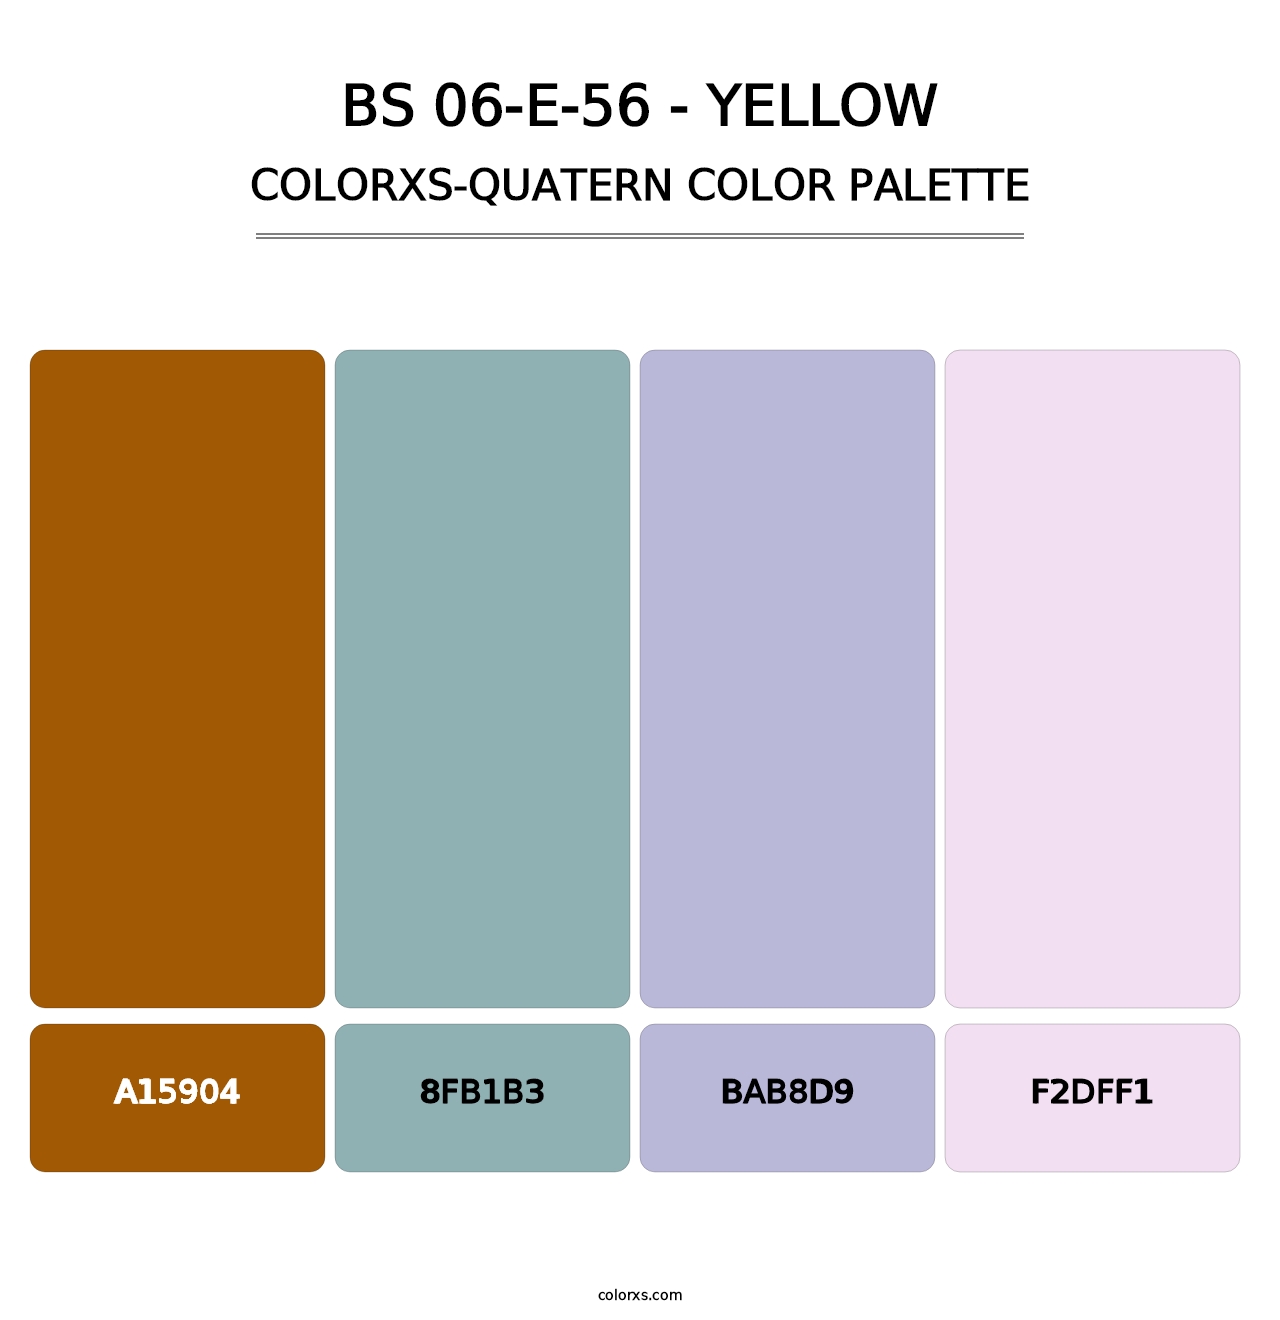 BS 06-E-56 - Yellow - Colorxs Quatern Palette